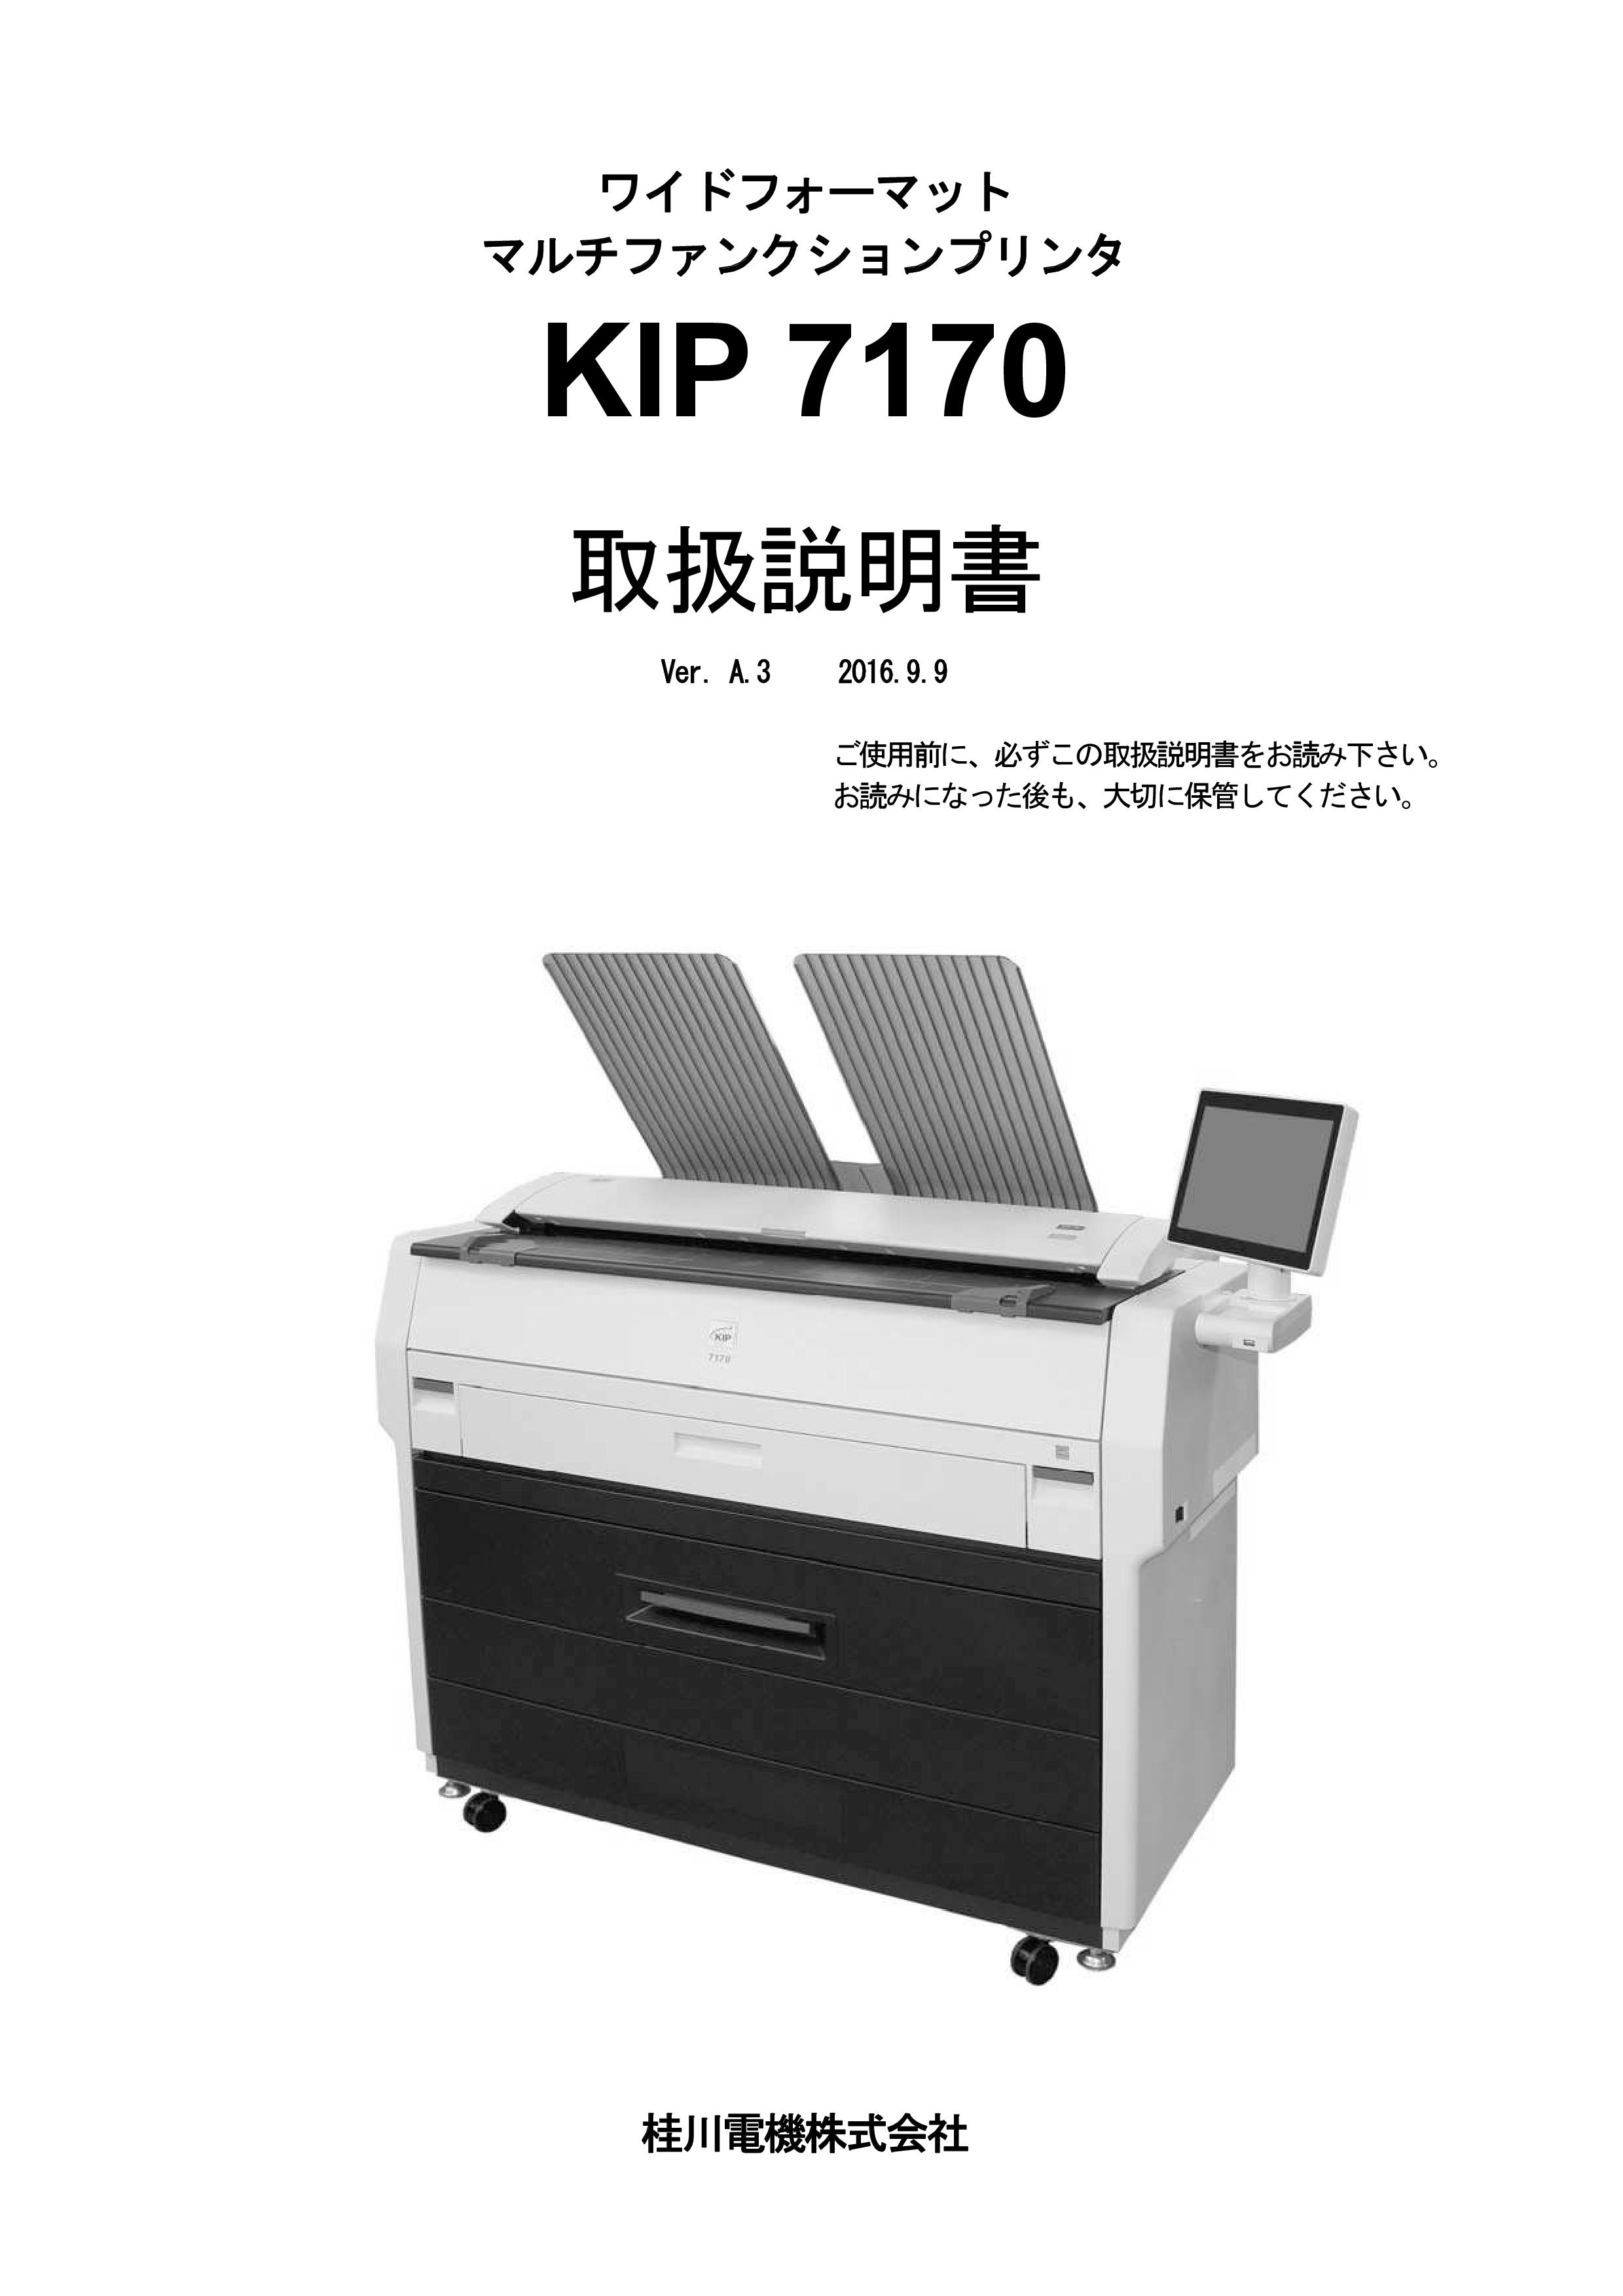 KIP 7170ユーザーガイド